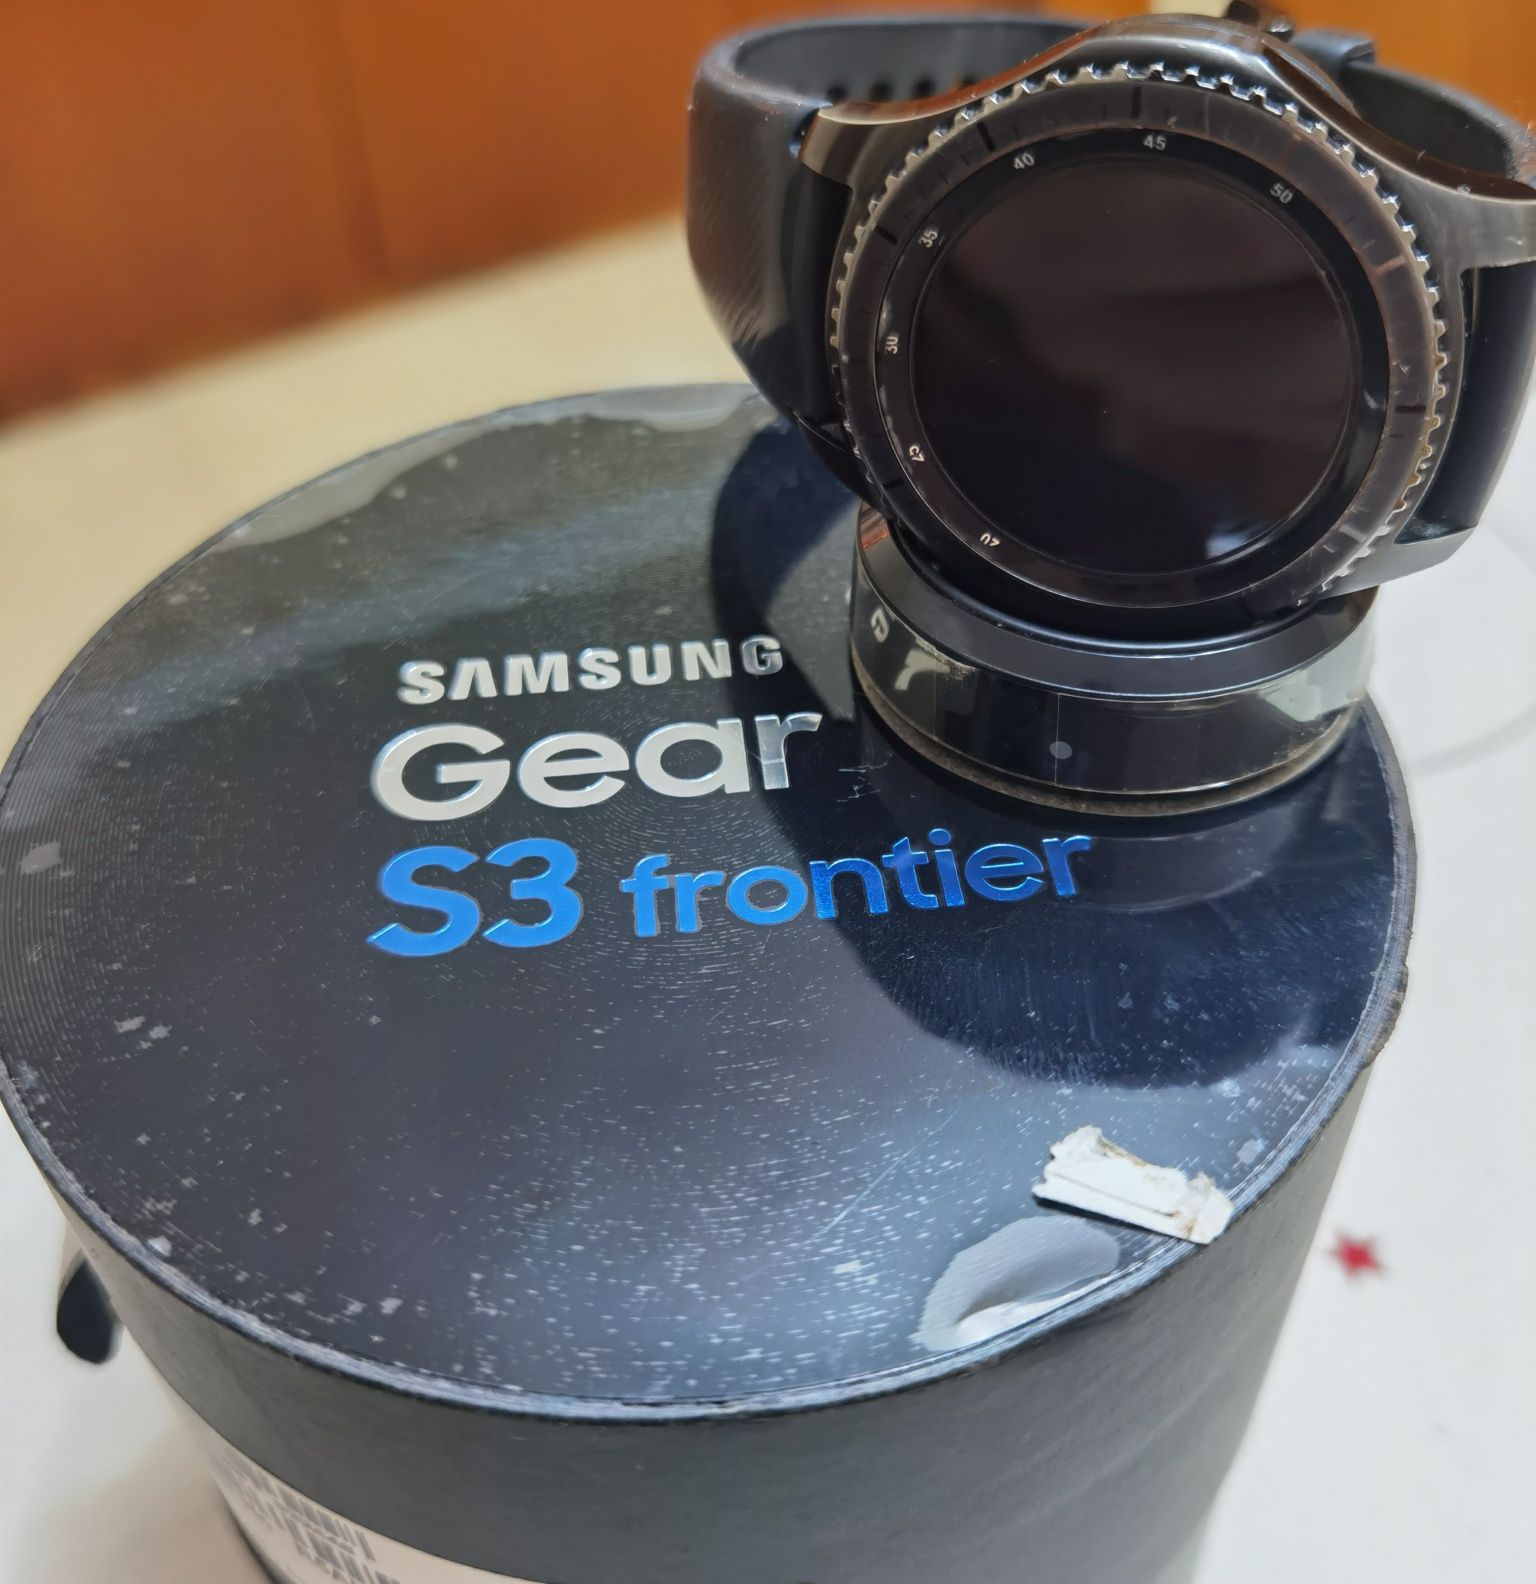 Samsung Gear S3 Frontier